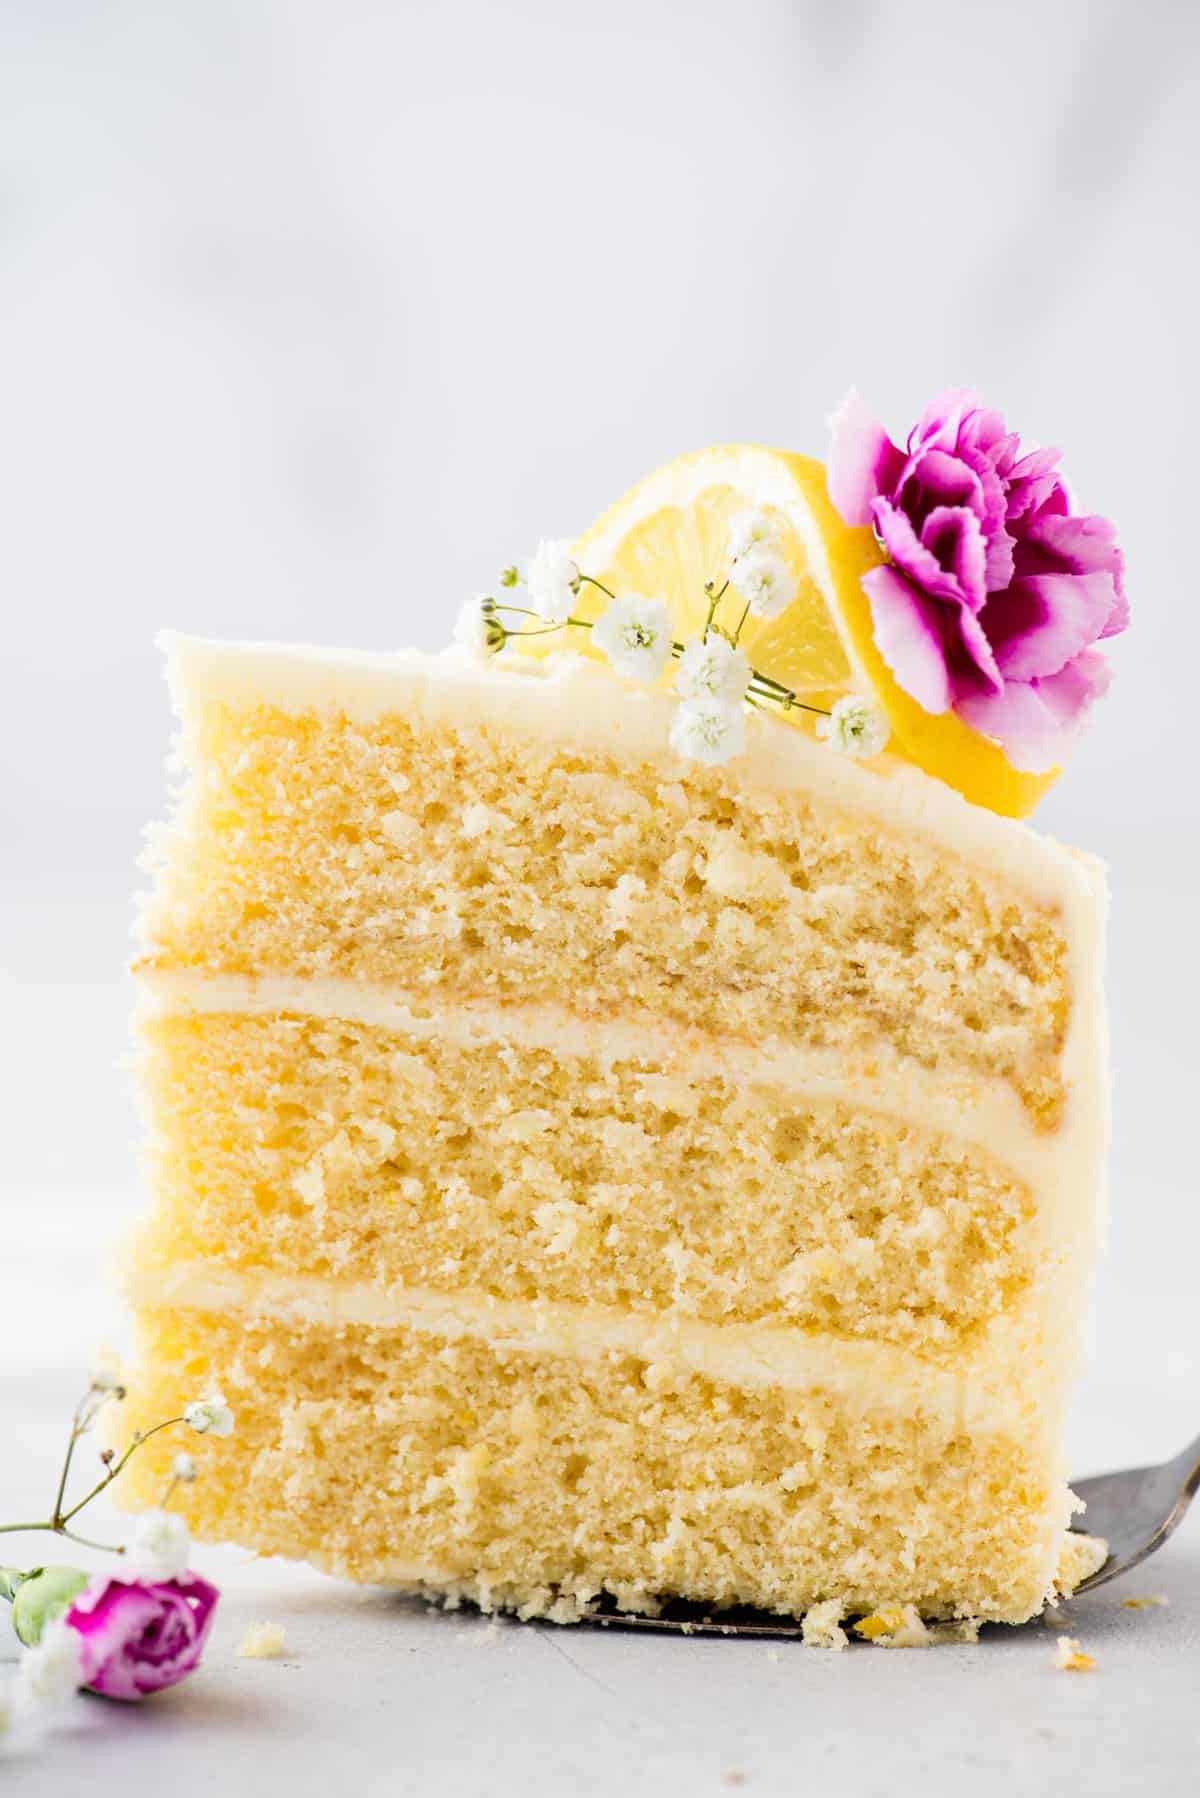 Slice of lemon layer cake on cake server, garnished with flowers and fresh lemon